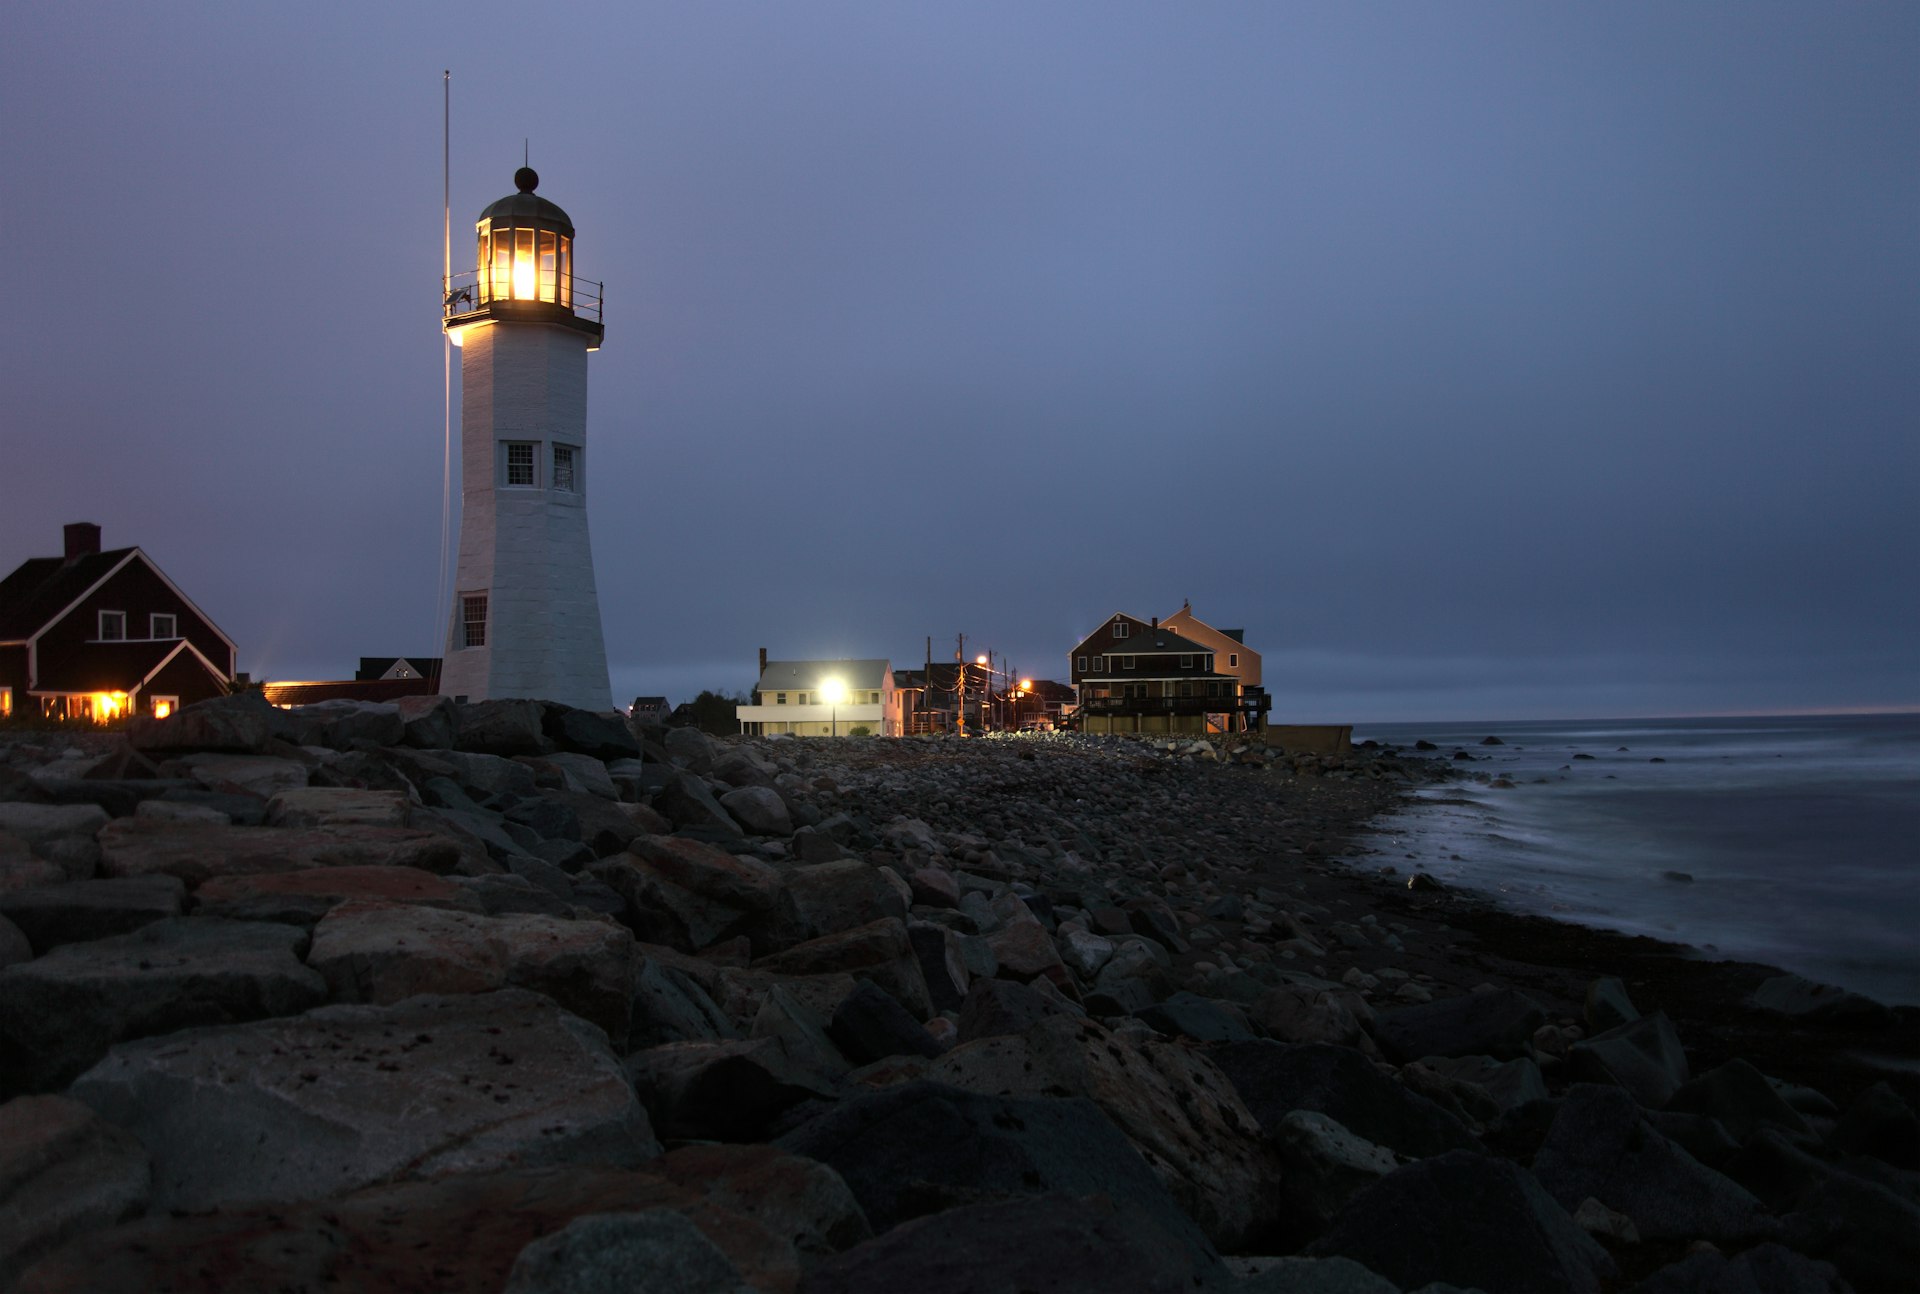 Historic Scituate Lighthouse on the Massachusetts coast at night.